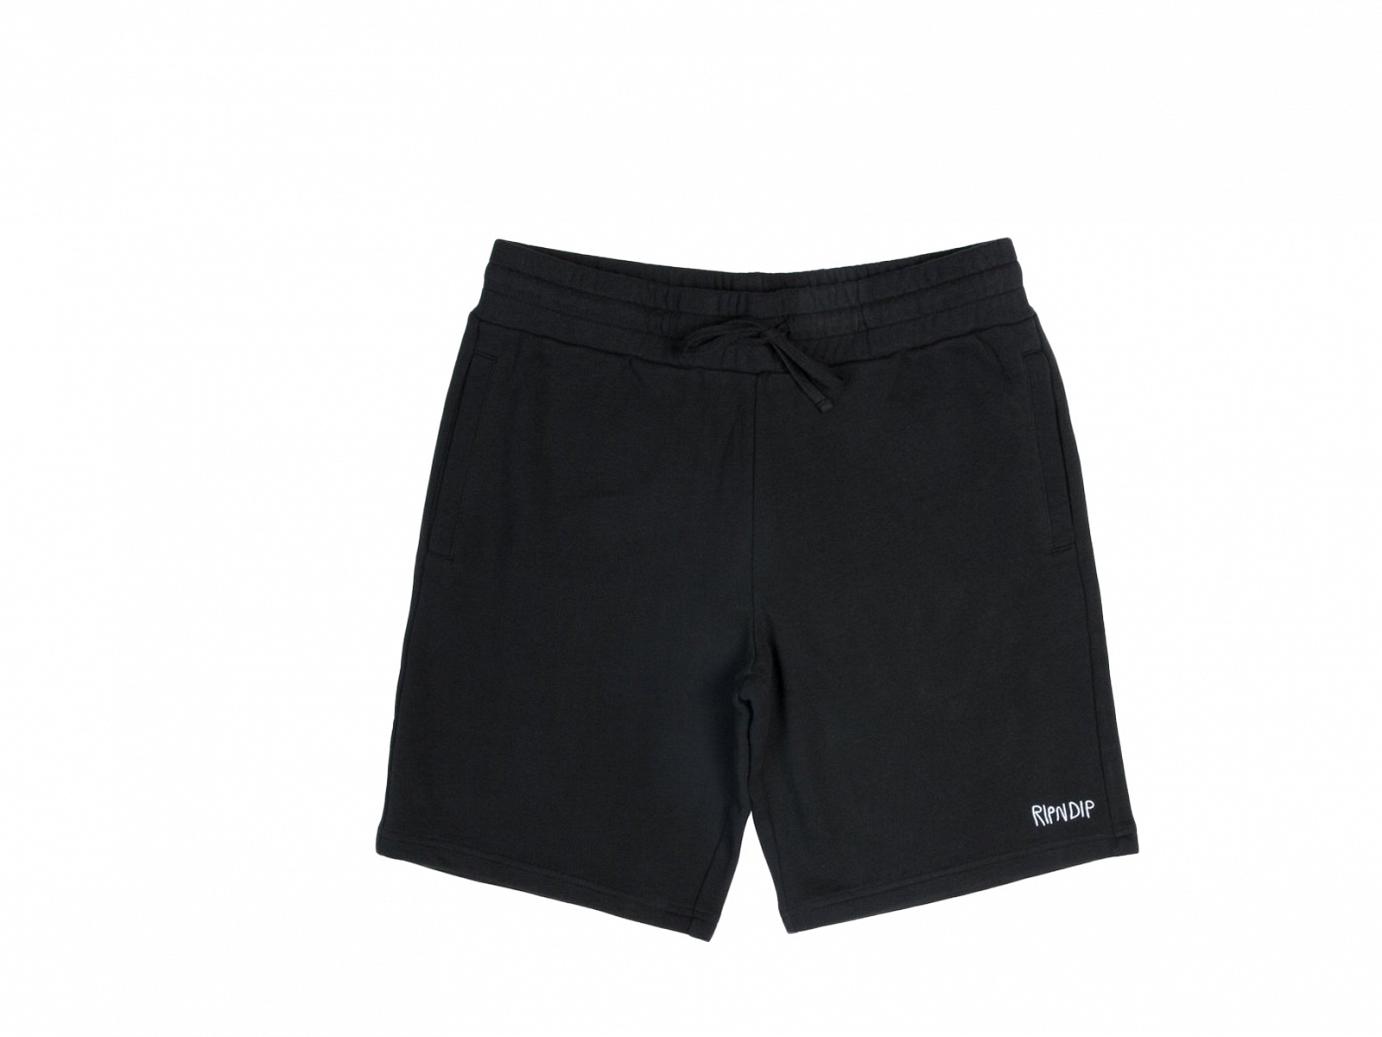 peeking nerm sweat shorts - Swearhand